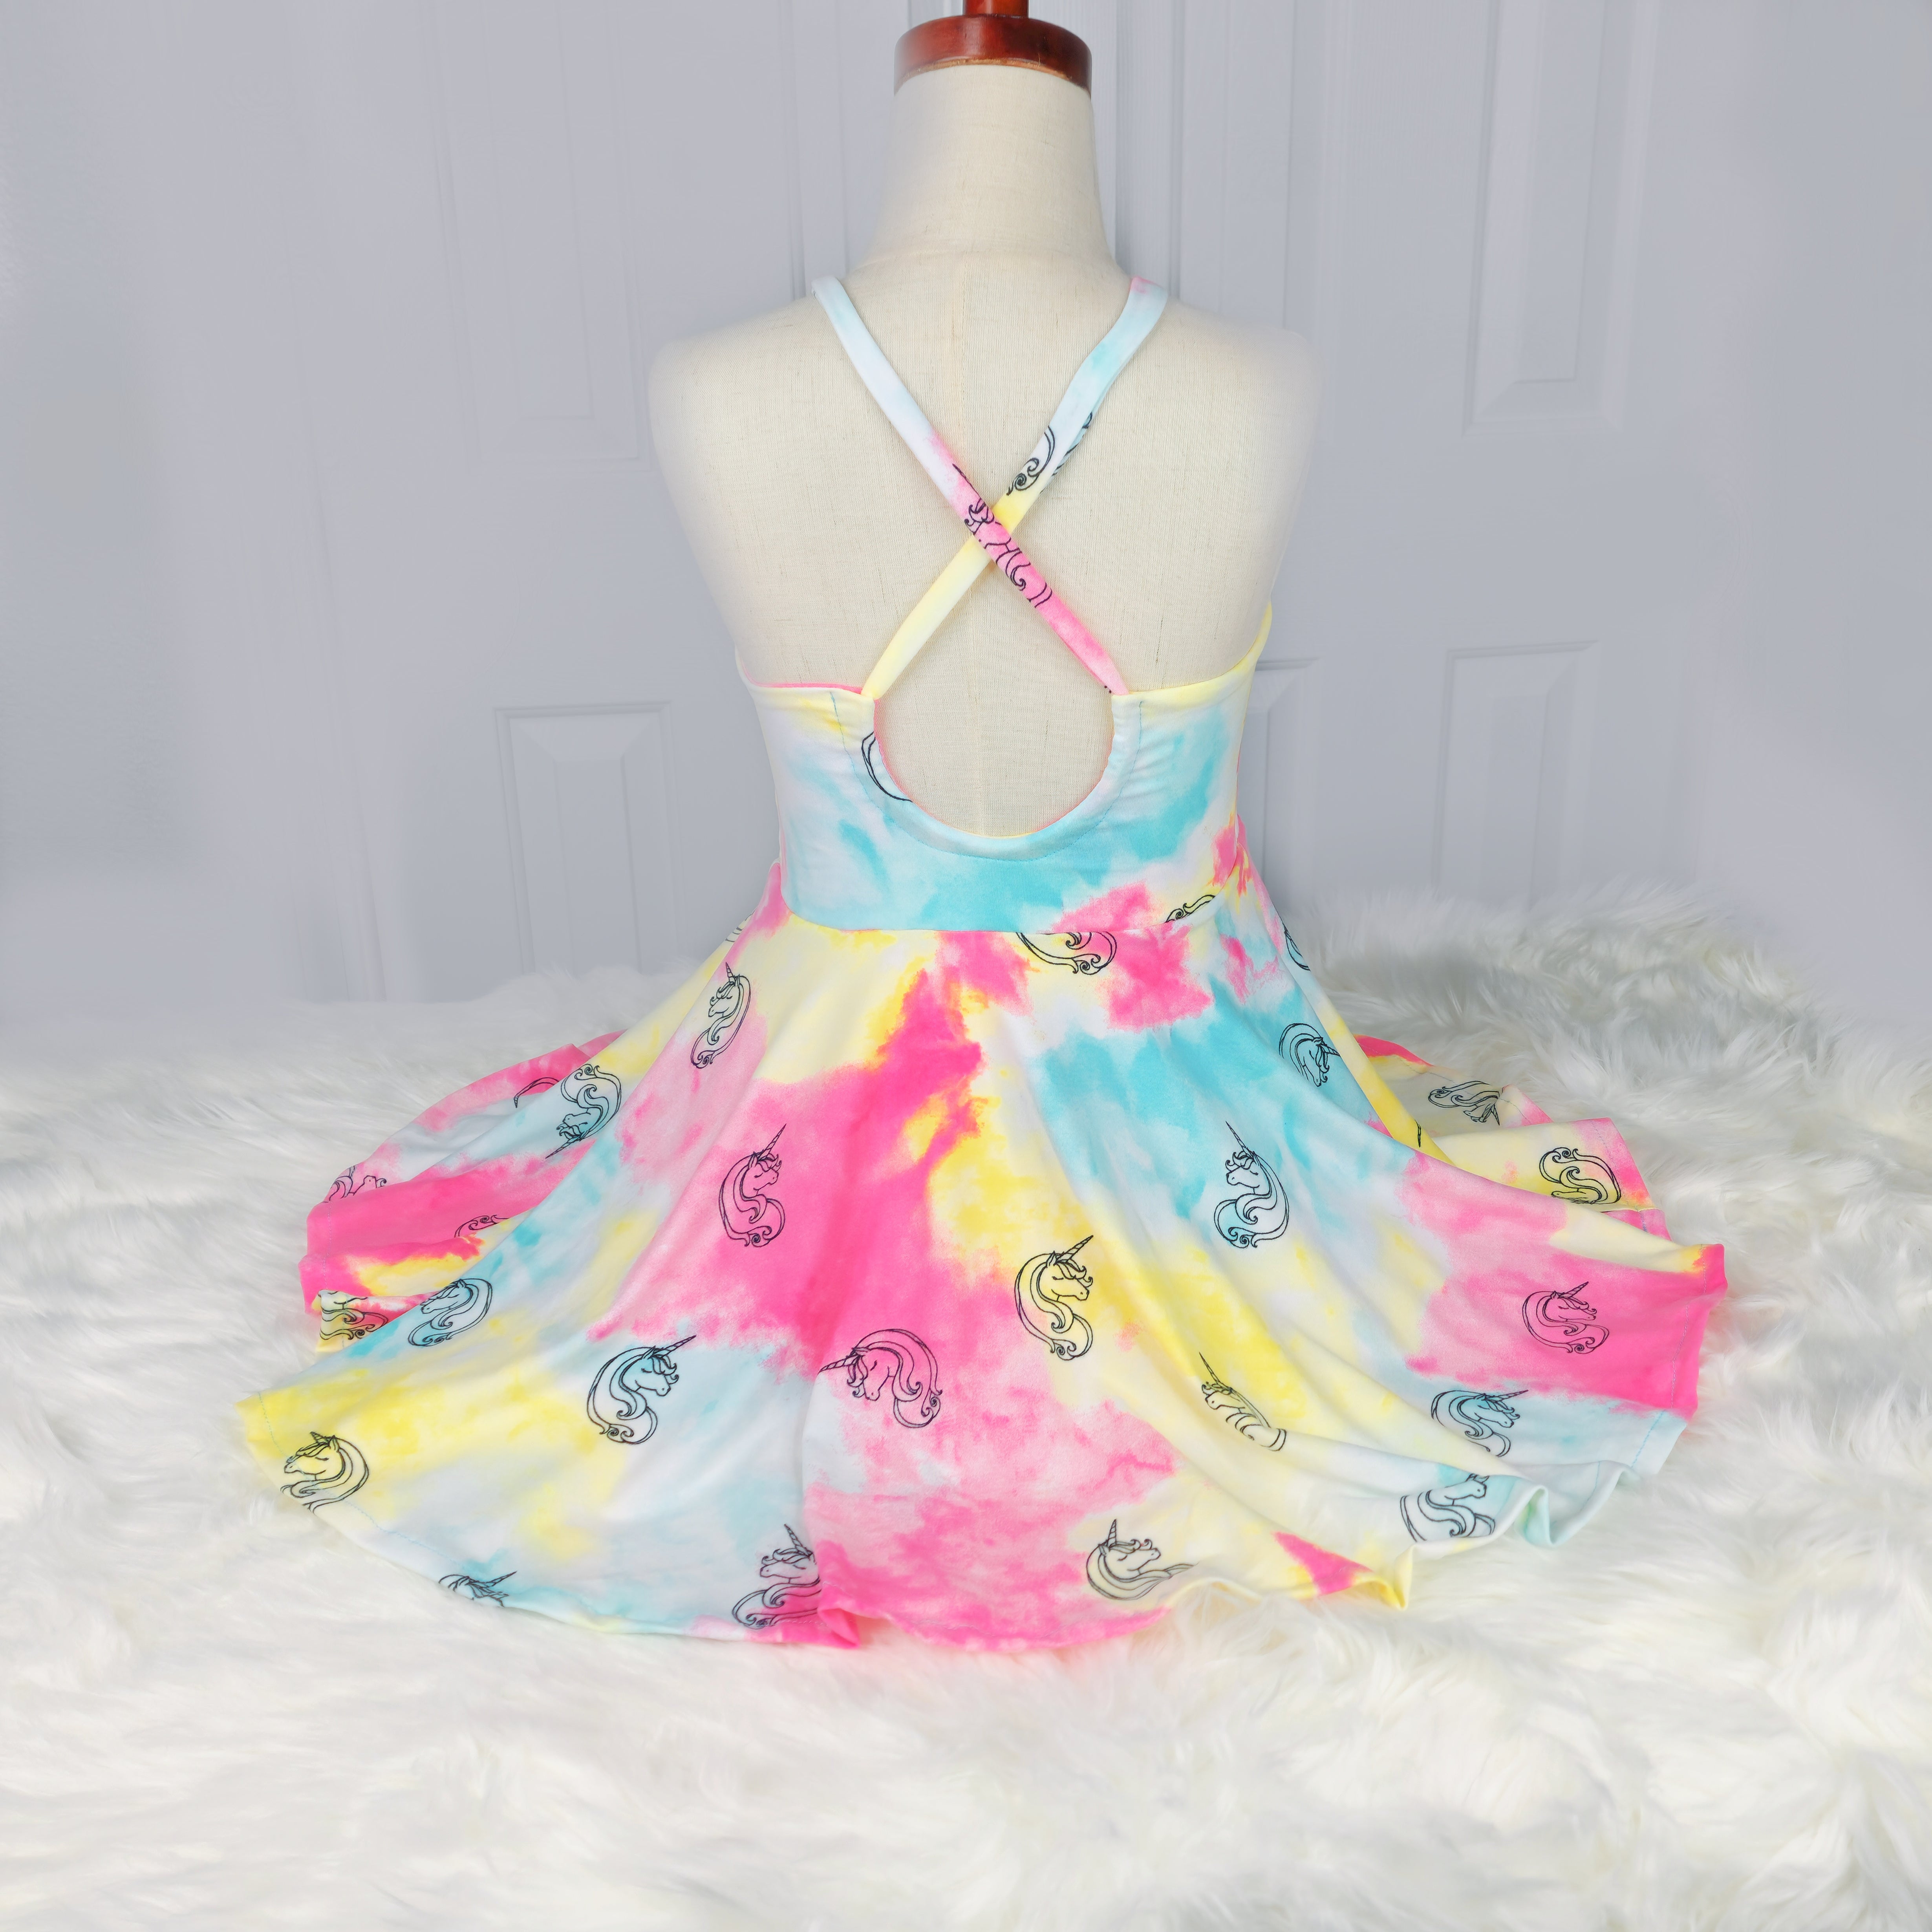 Neon Tie Dye Unicorn Summer Dress, Swimsuit Cover Up